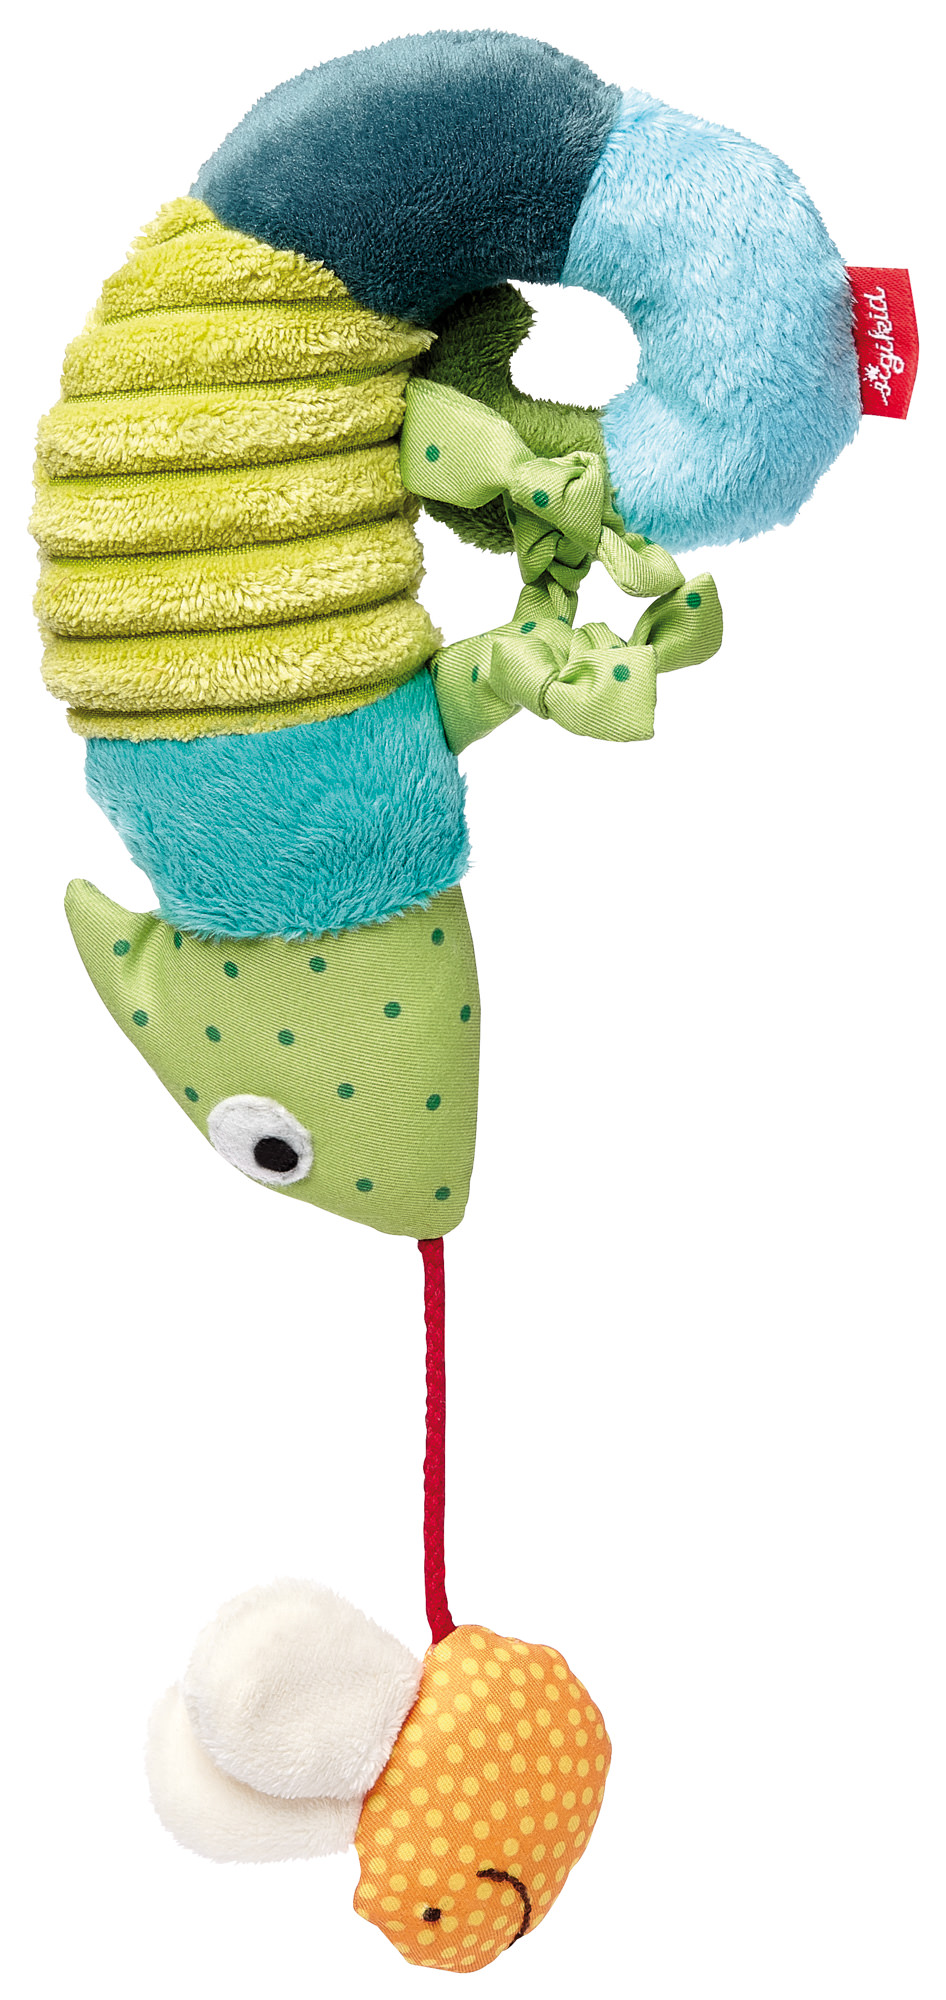 Hanging toy chameleon